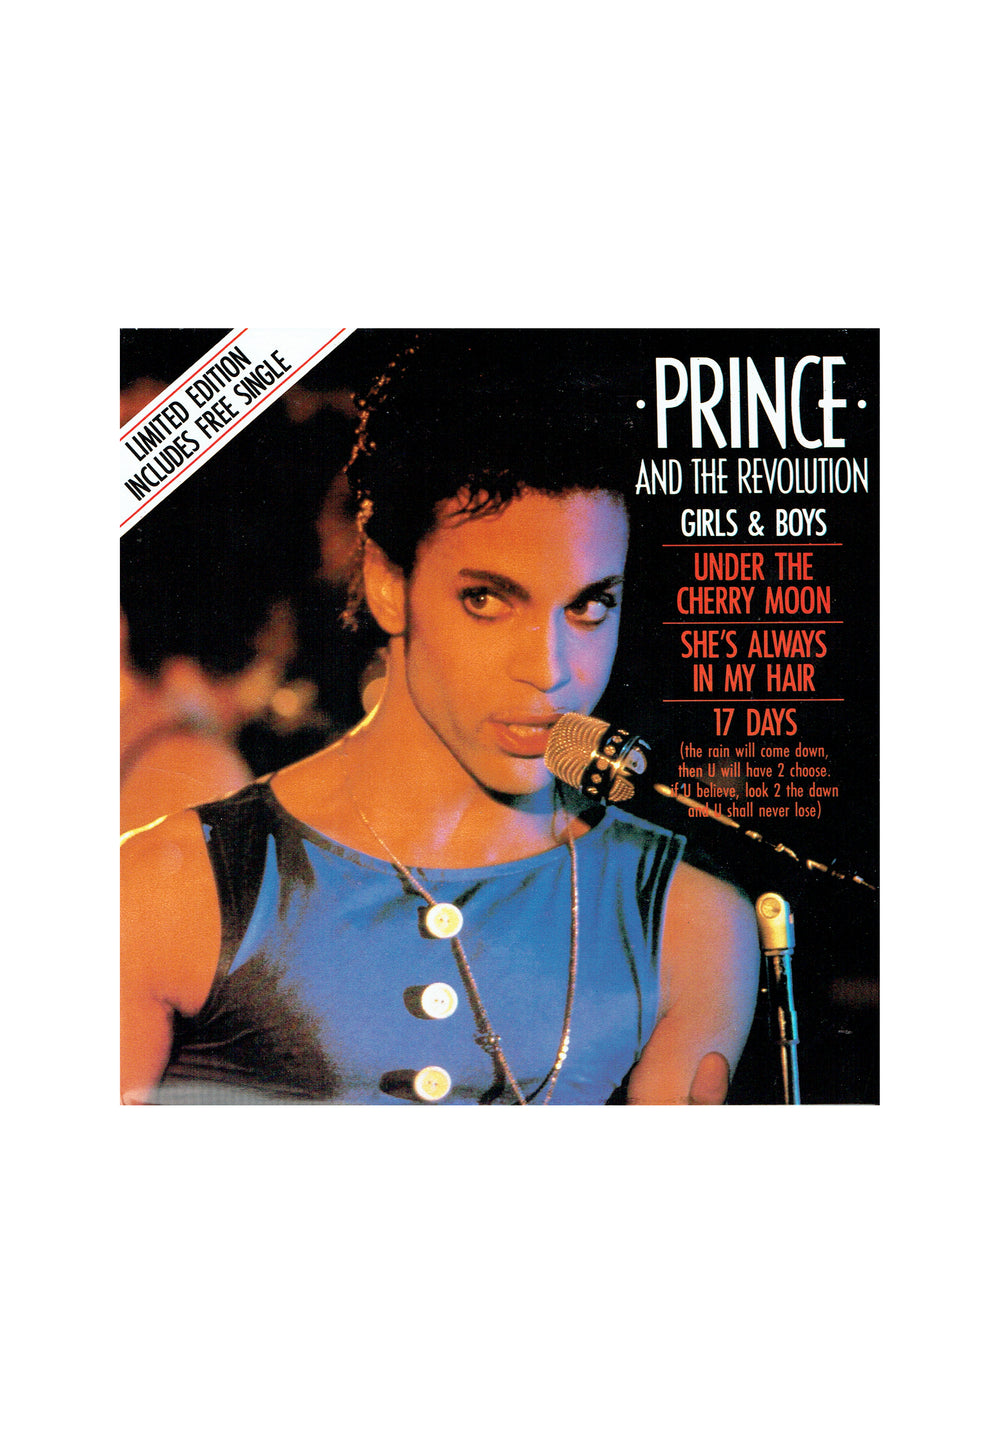 Prince & The Revolution Girls & Boys Double Pack UK 7 Inch Vinyl Single 1986 SMS